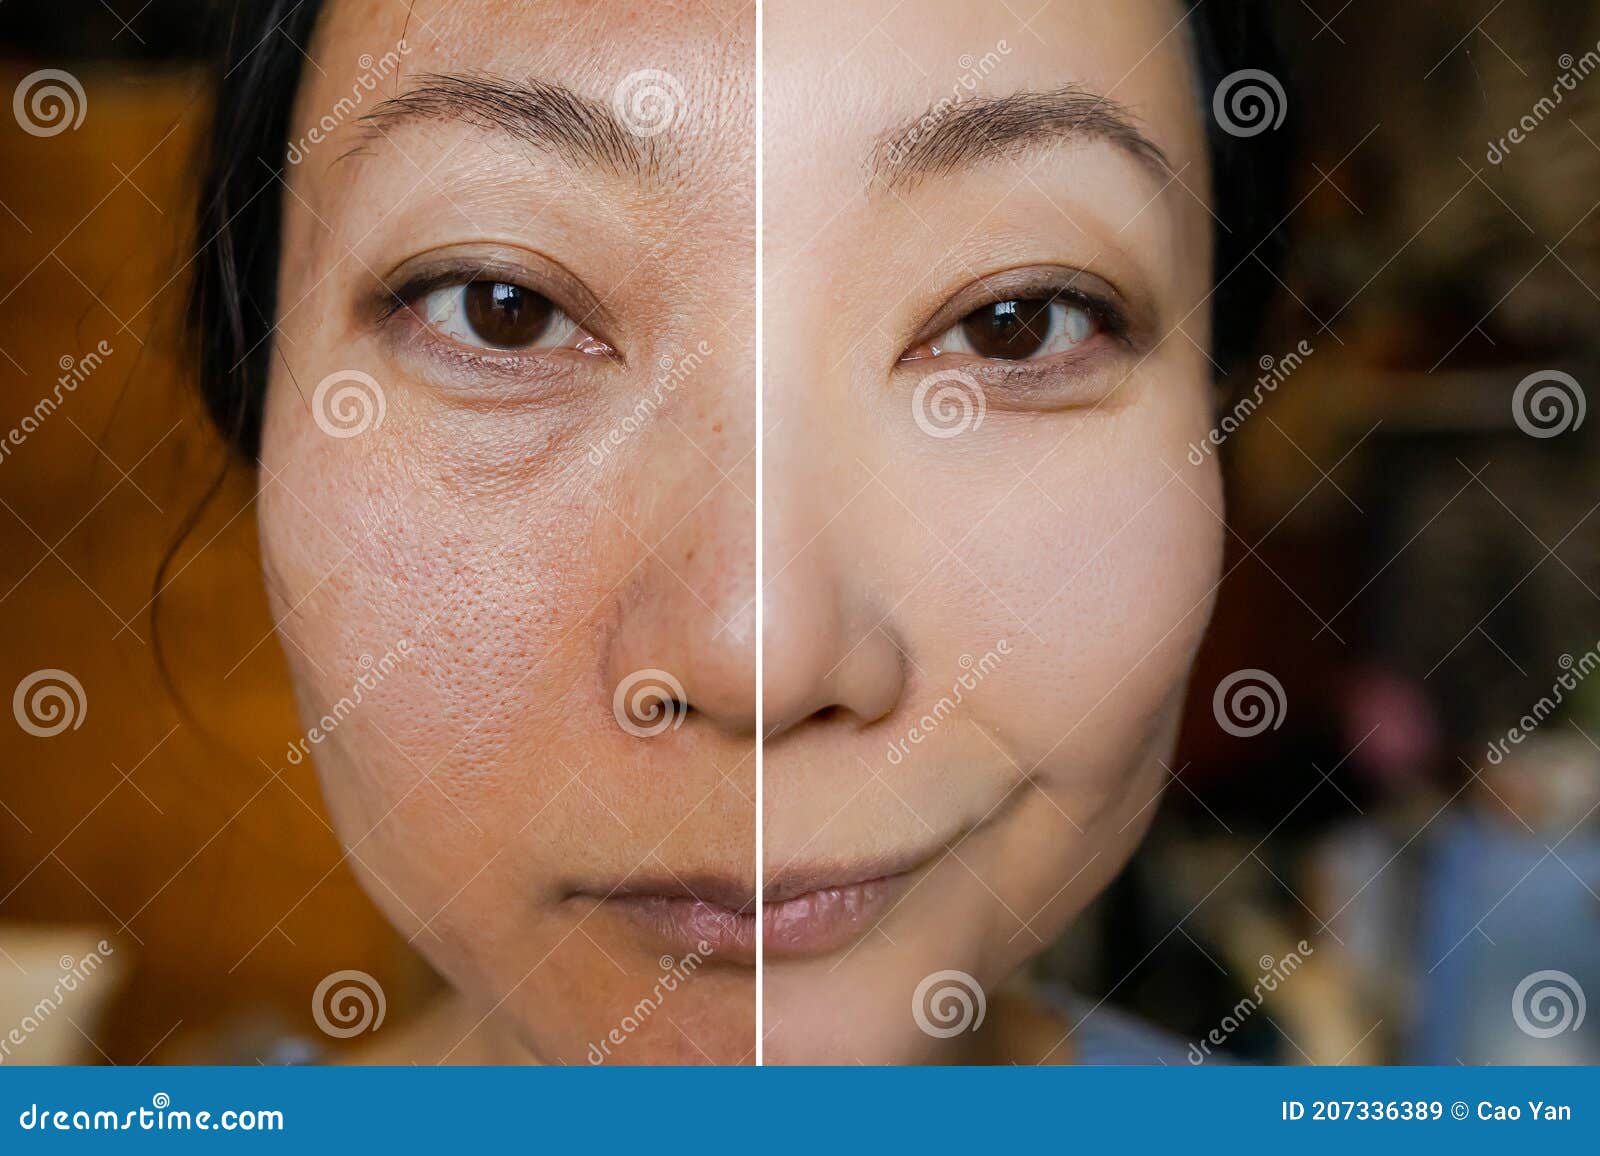 concept-skin-rejuvenation-cosmetic-operation-whitening-cream-asian-women-concept-good-skin-rejuvenation-207336389.jpg